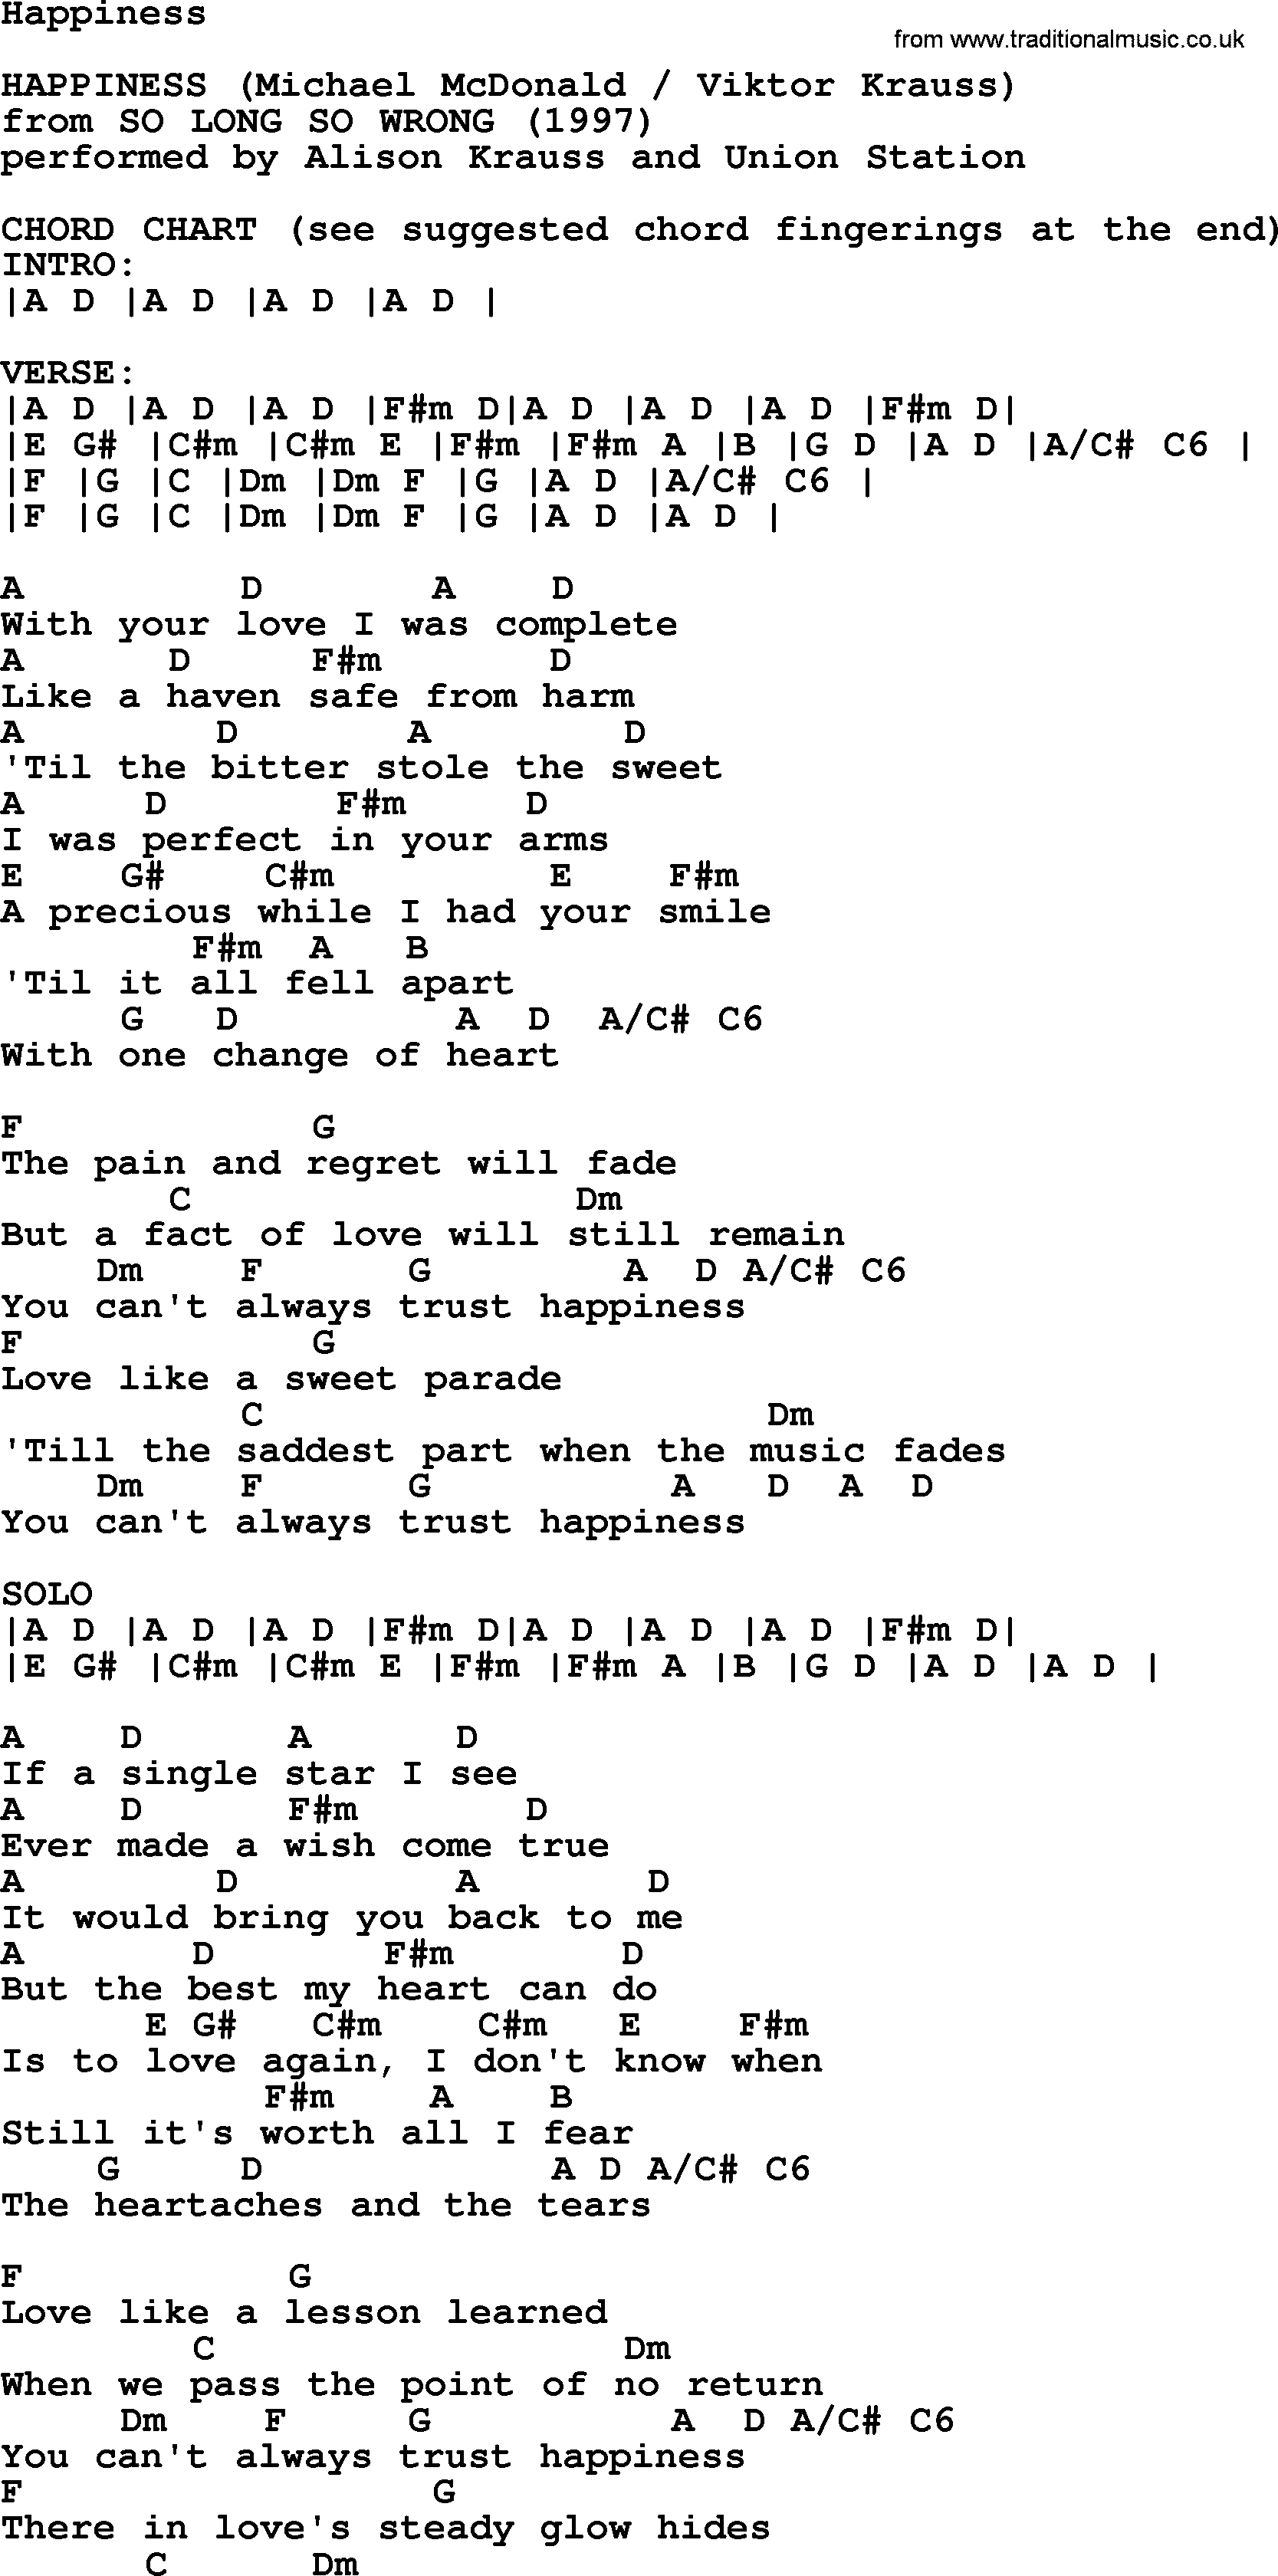 Happiness - Bluegrass lyrics with chords